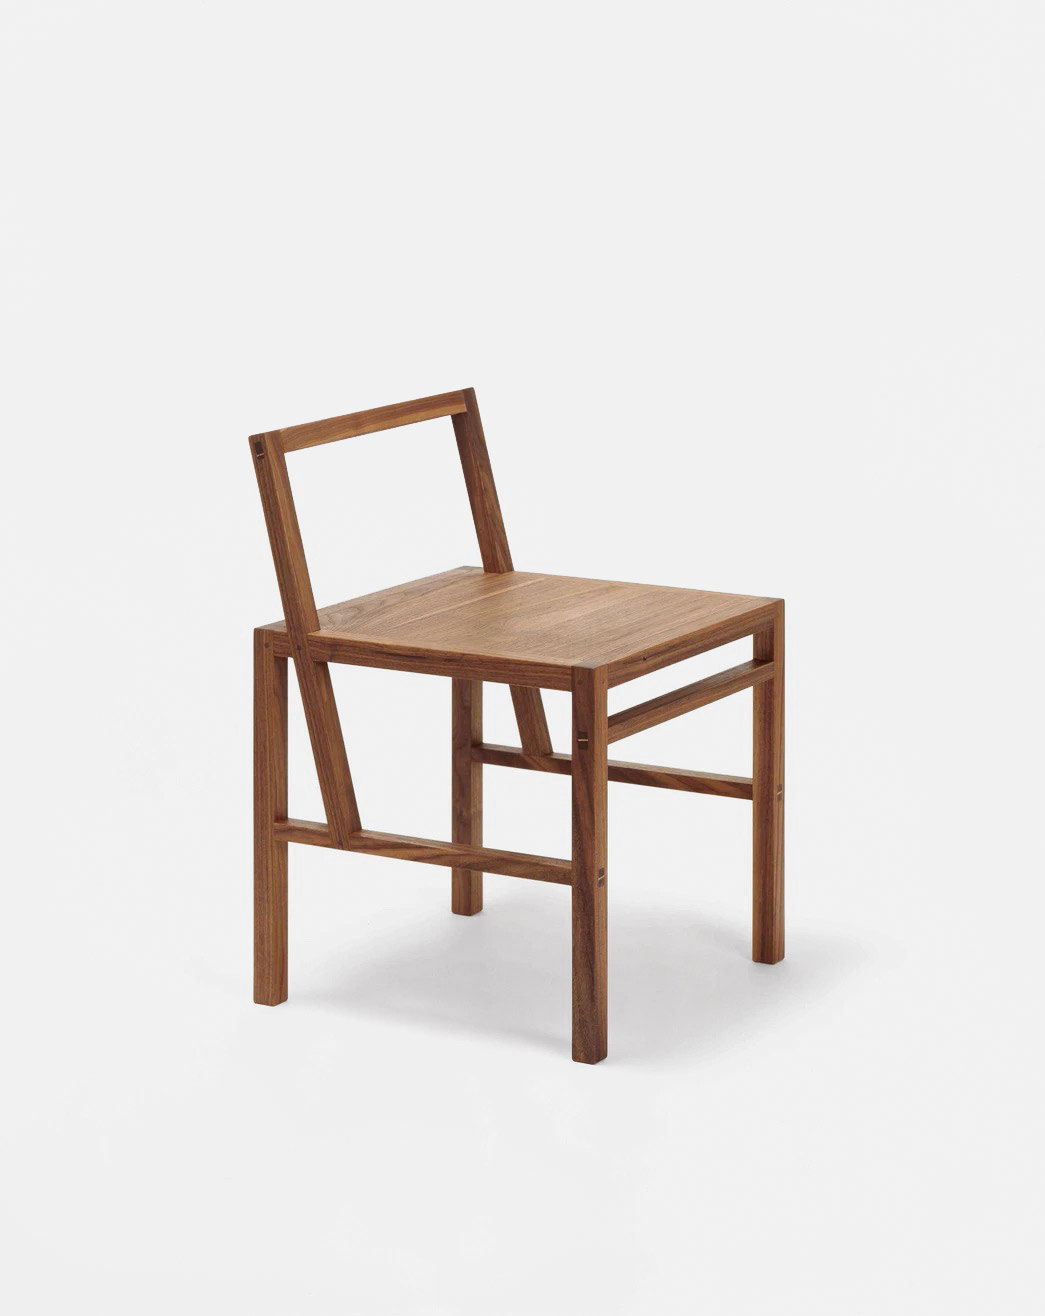 Minimalist Chair Design by Bahk Jong Sun